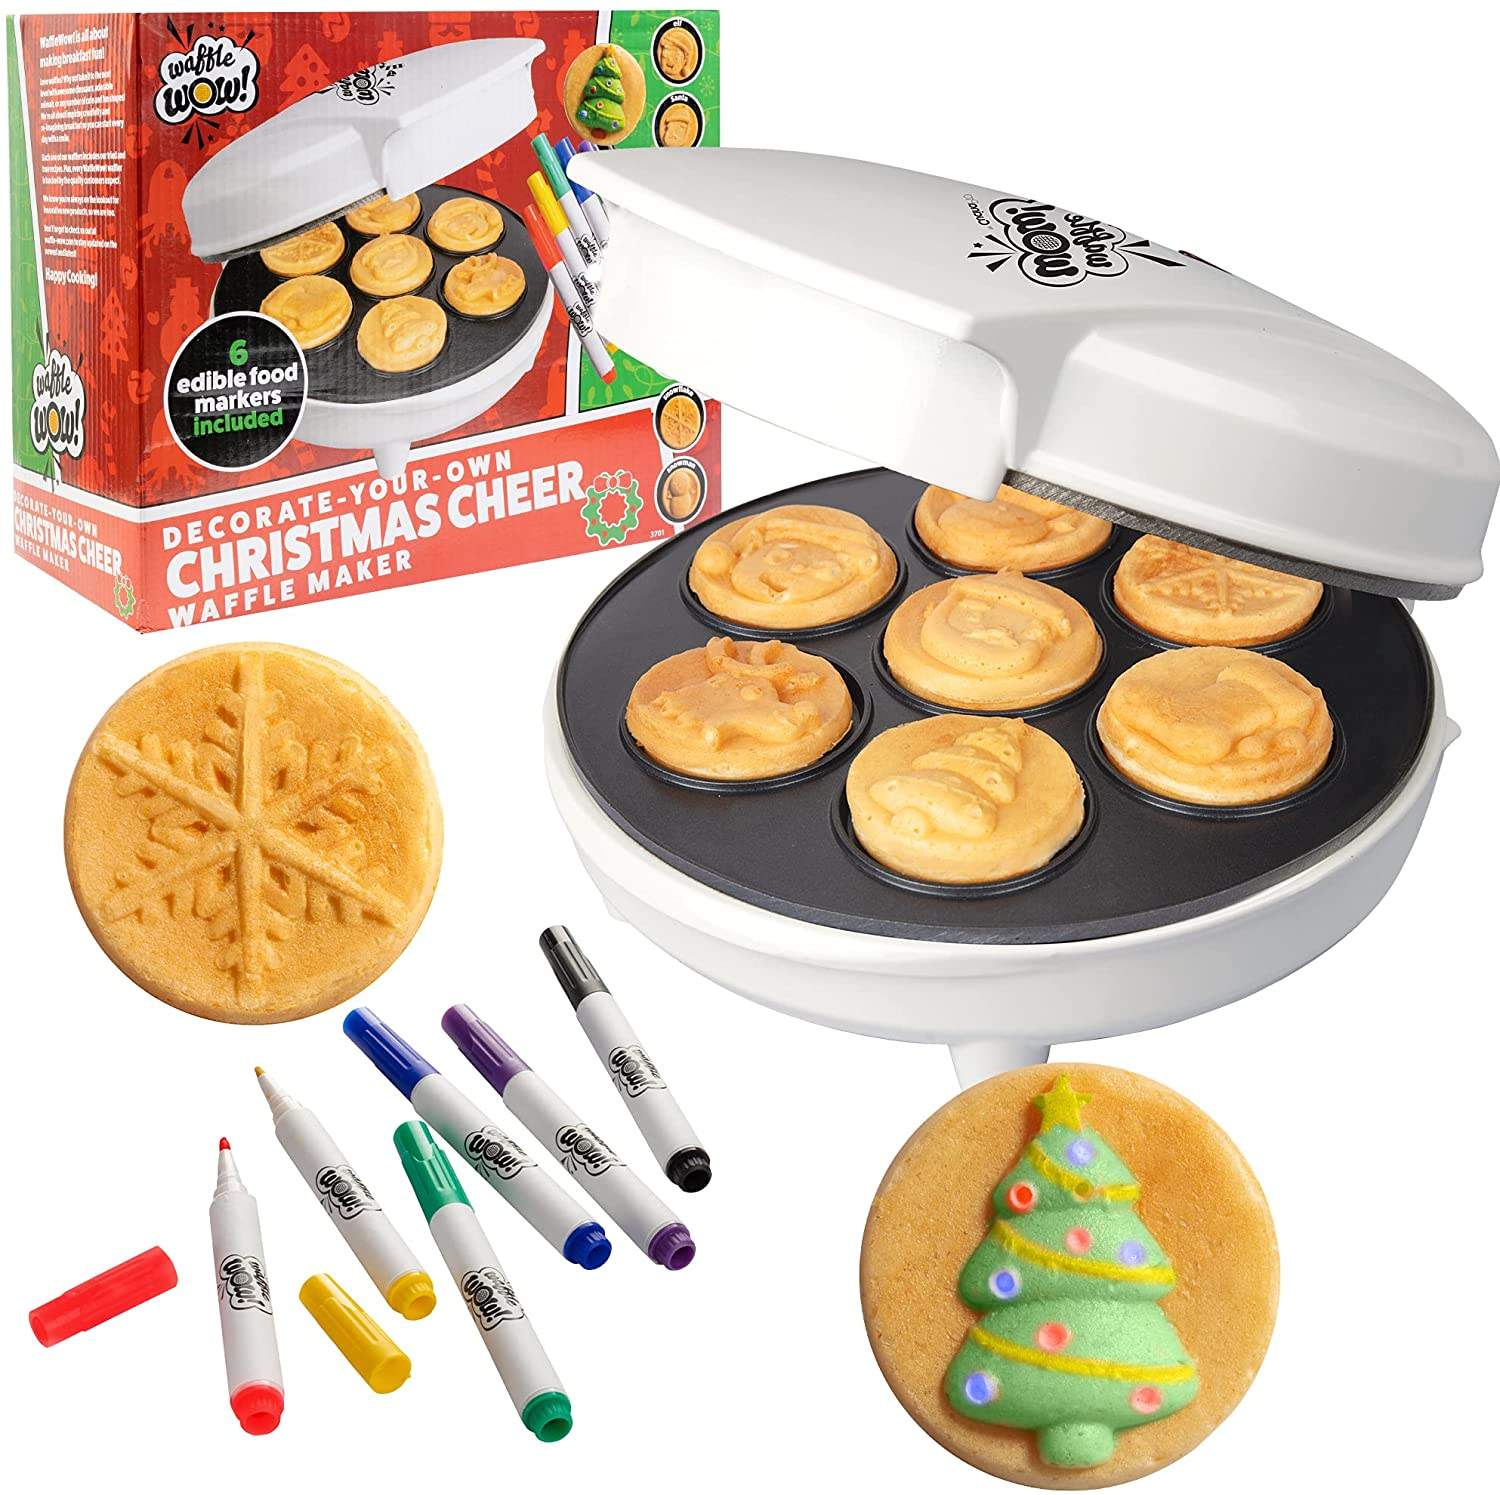 Christmas Cheer-Waffle Wow!-